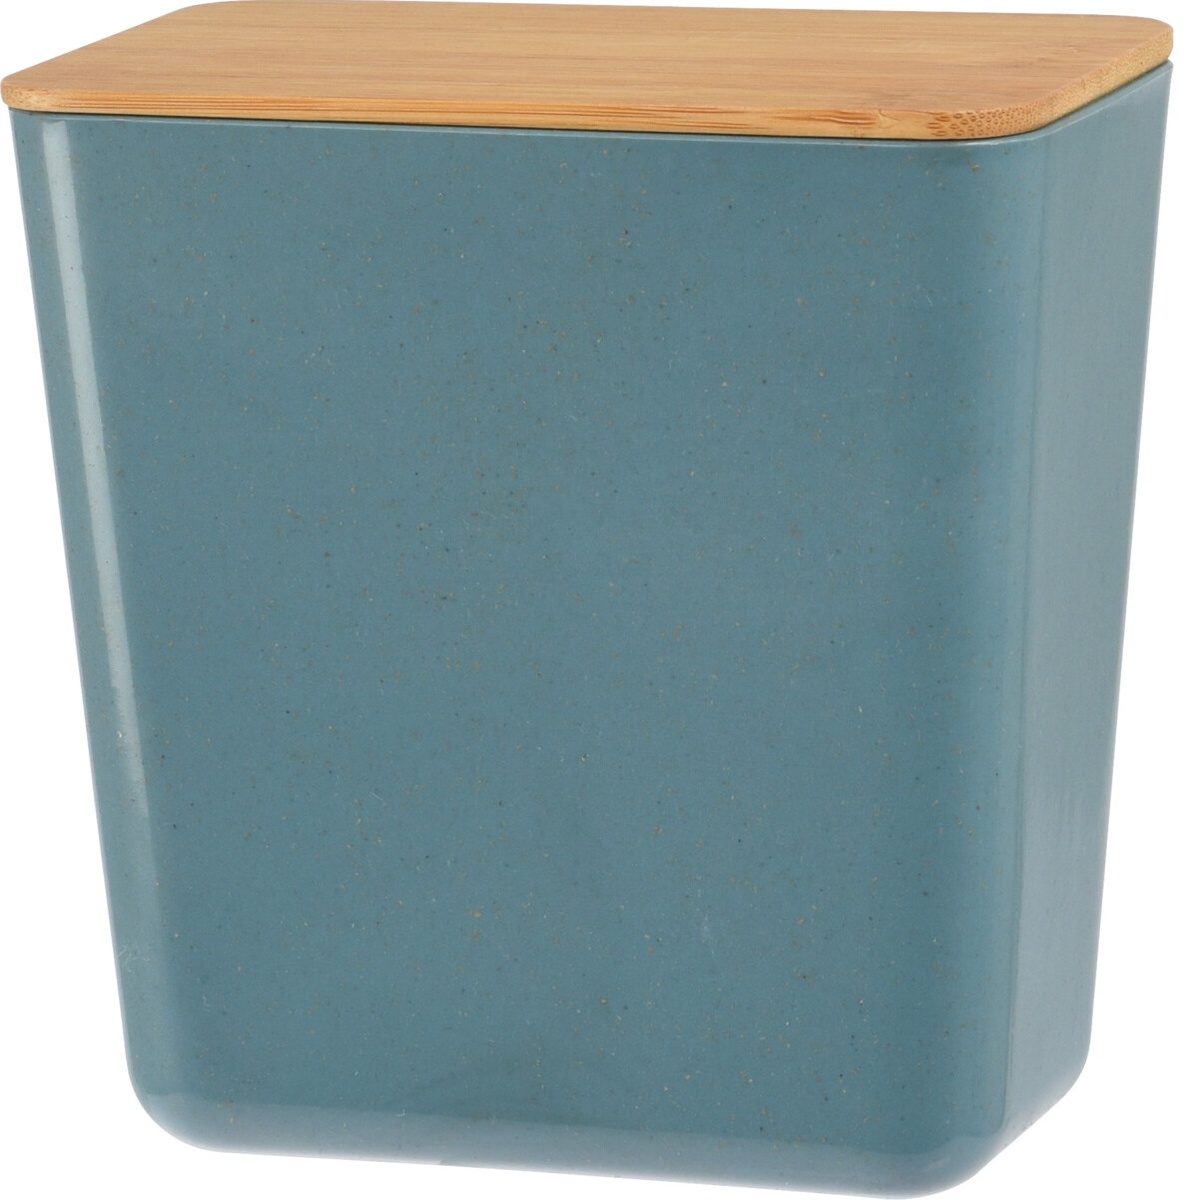 Úložný box s bambusovým víkem Roger, 13 x 13,7 x 8 cm, modrá